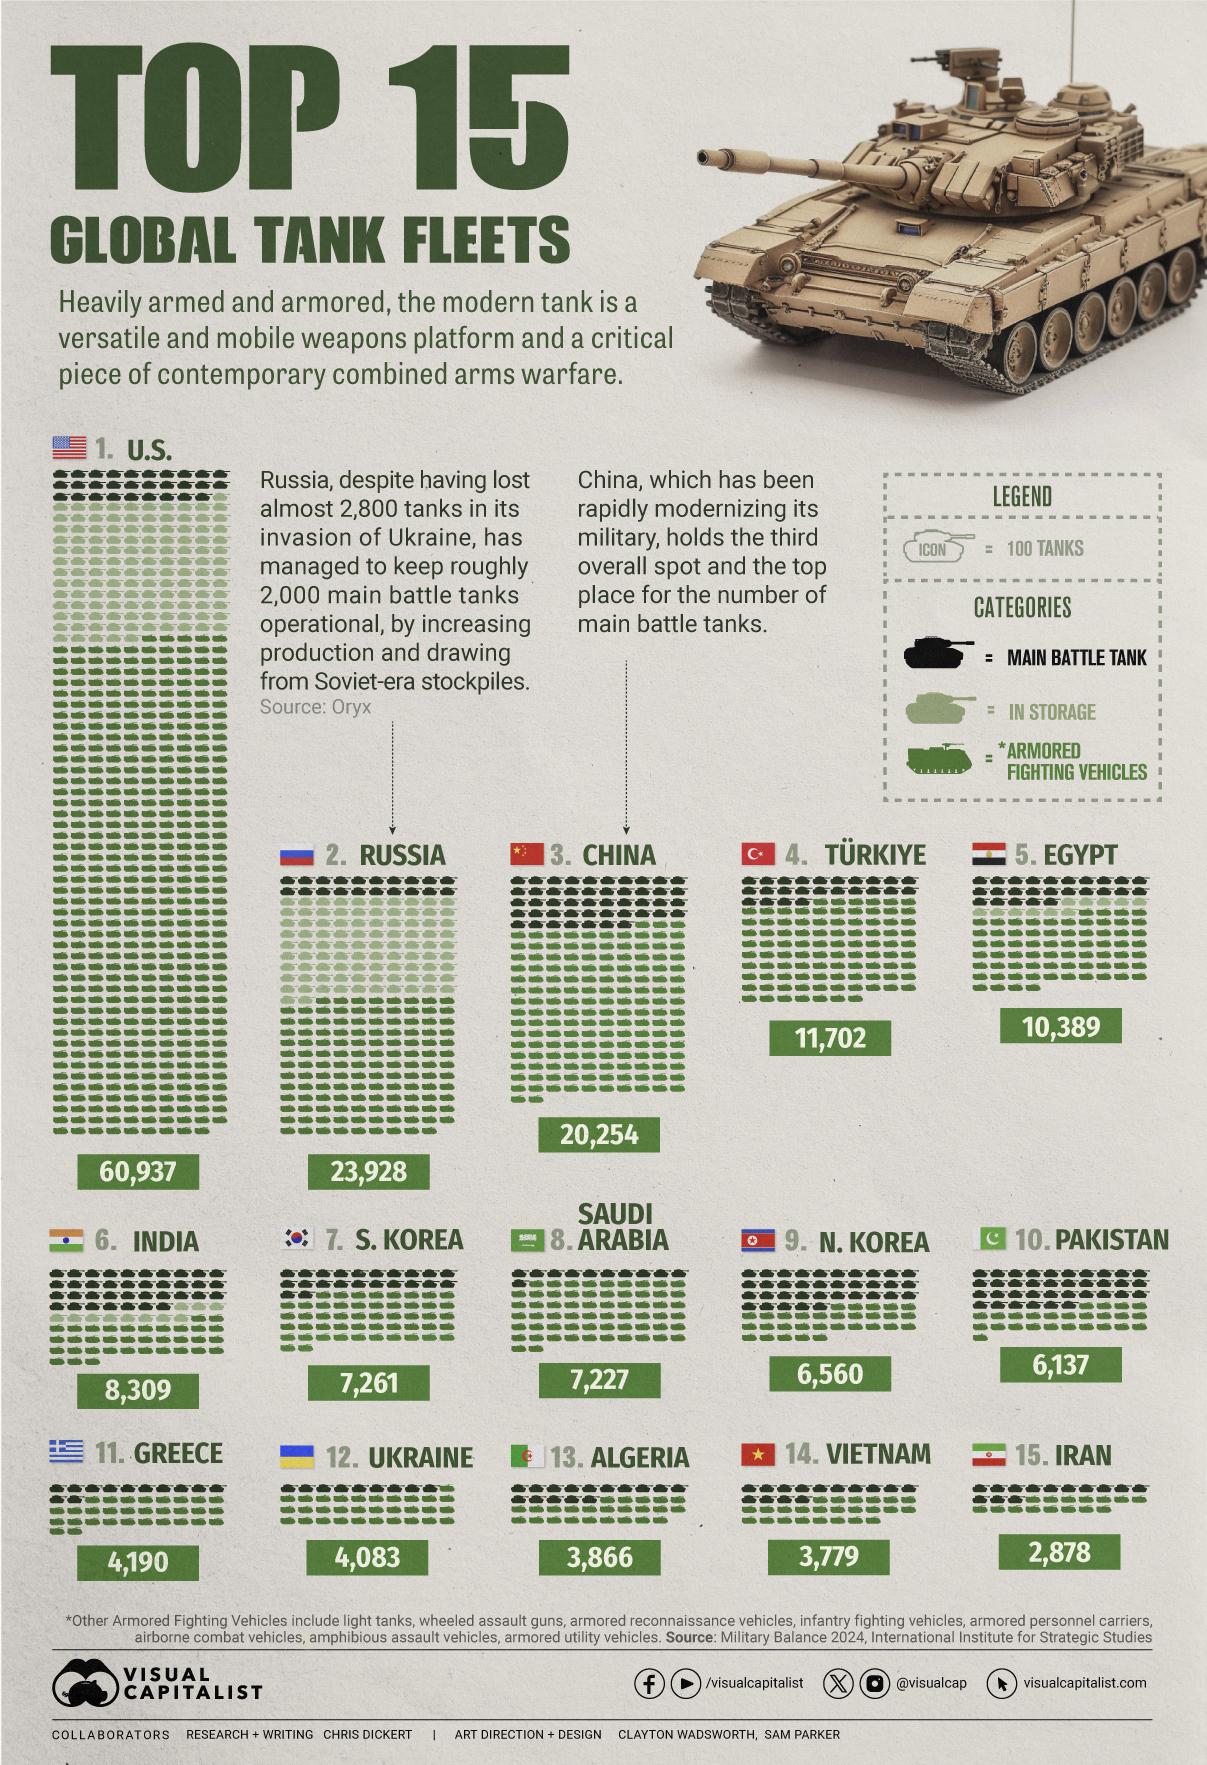 Visualized: Top 15 Global Tank Fleets